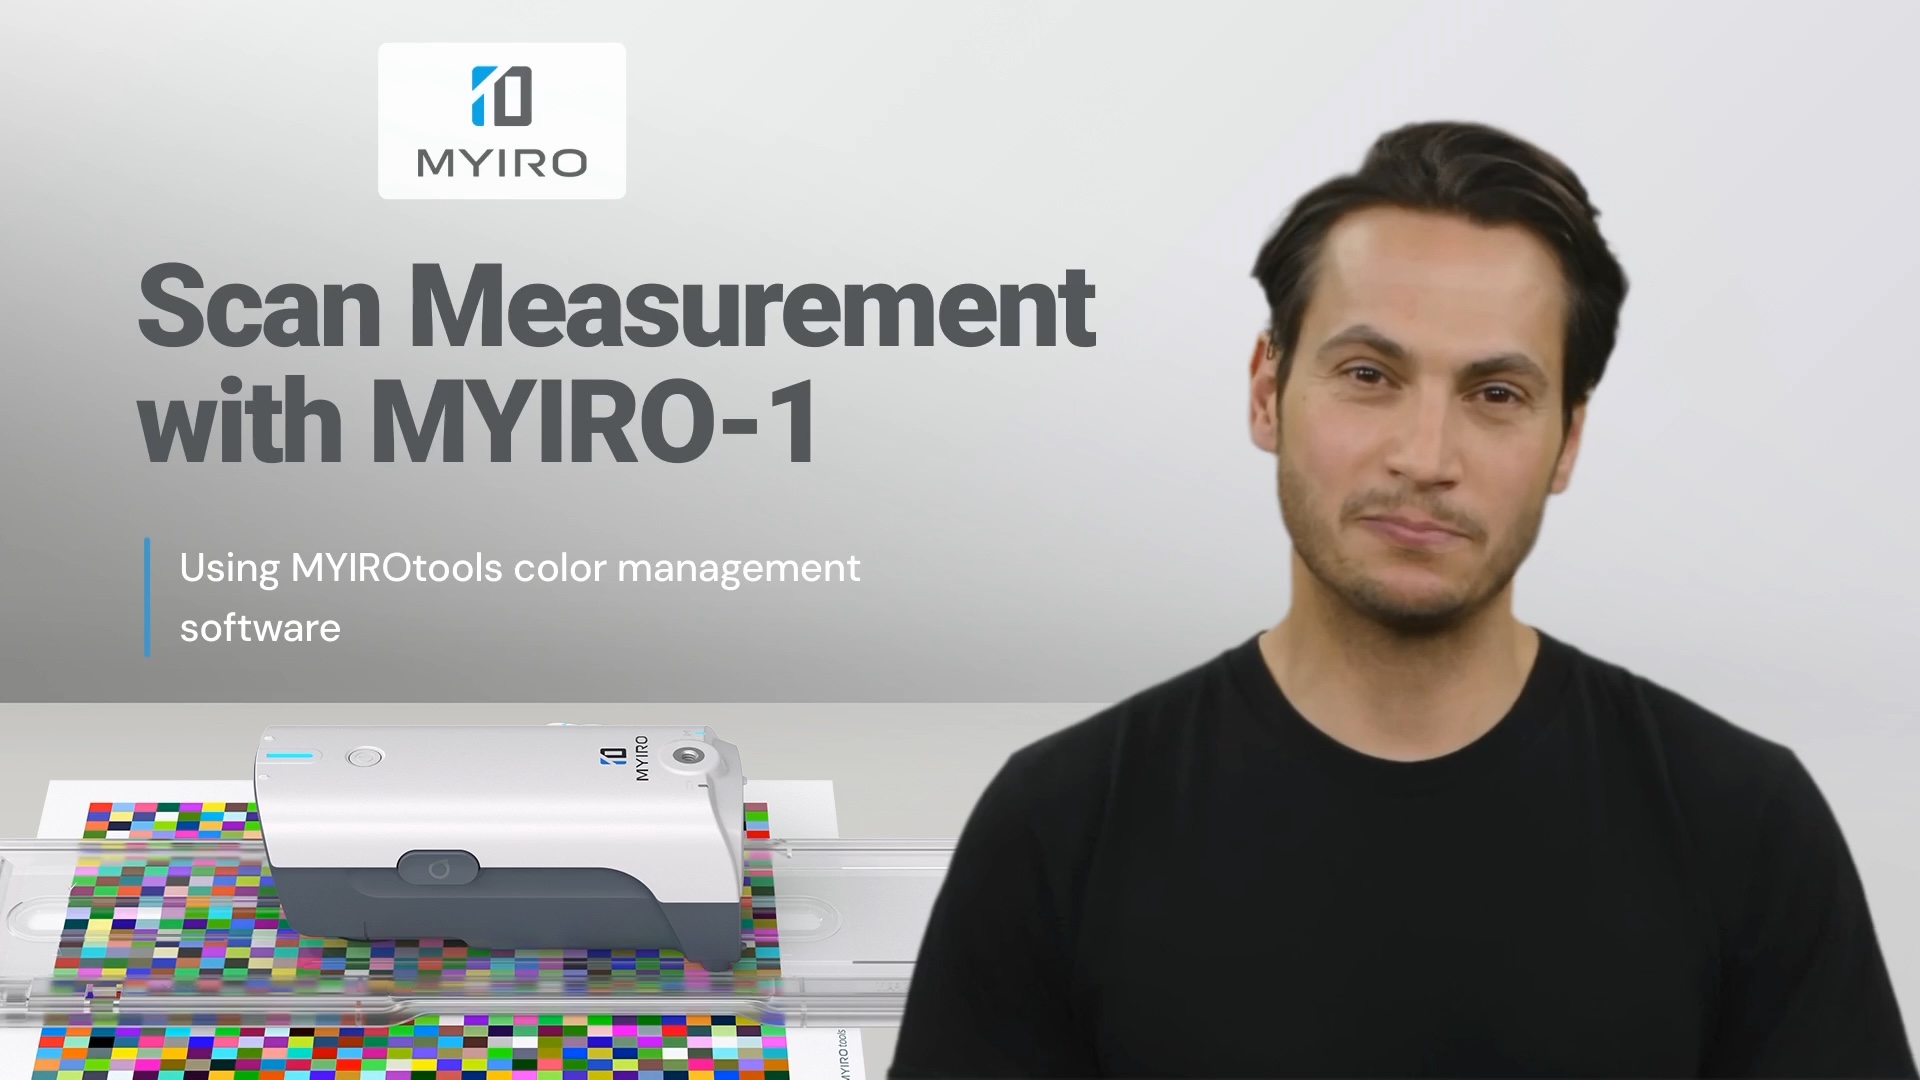 Scan Measurement with MYIRO-1